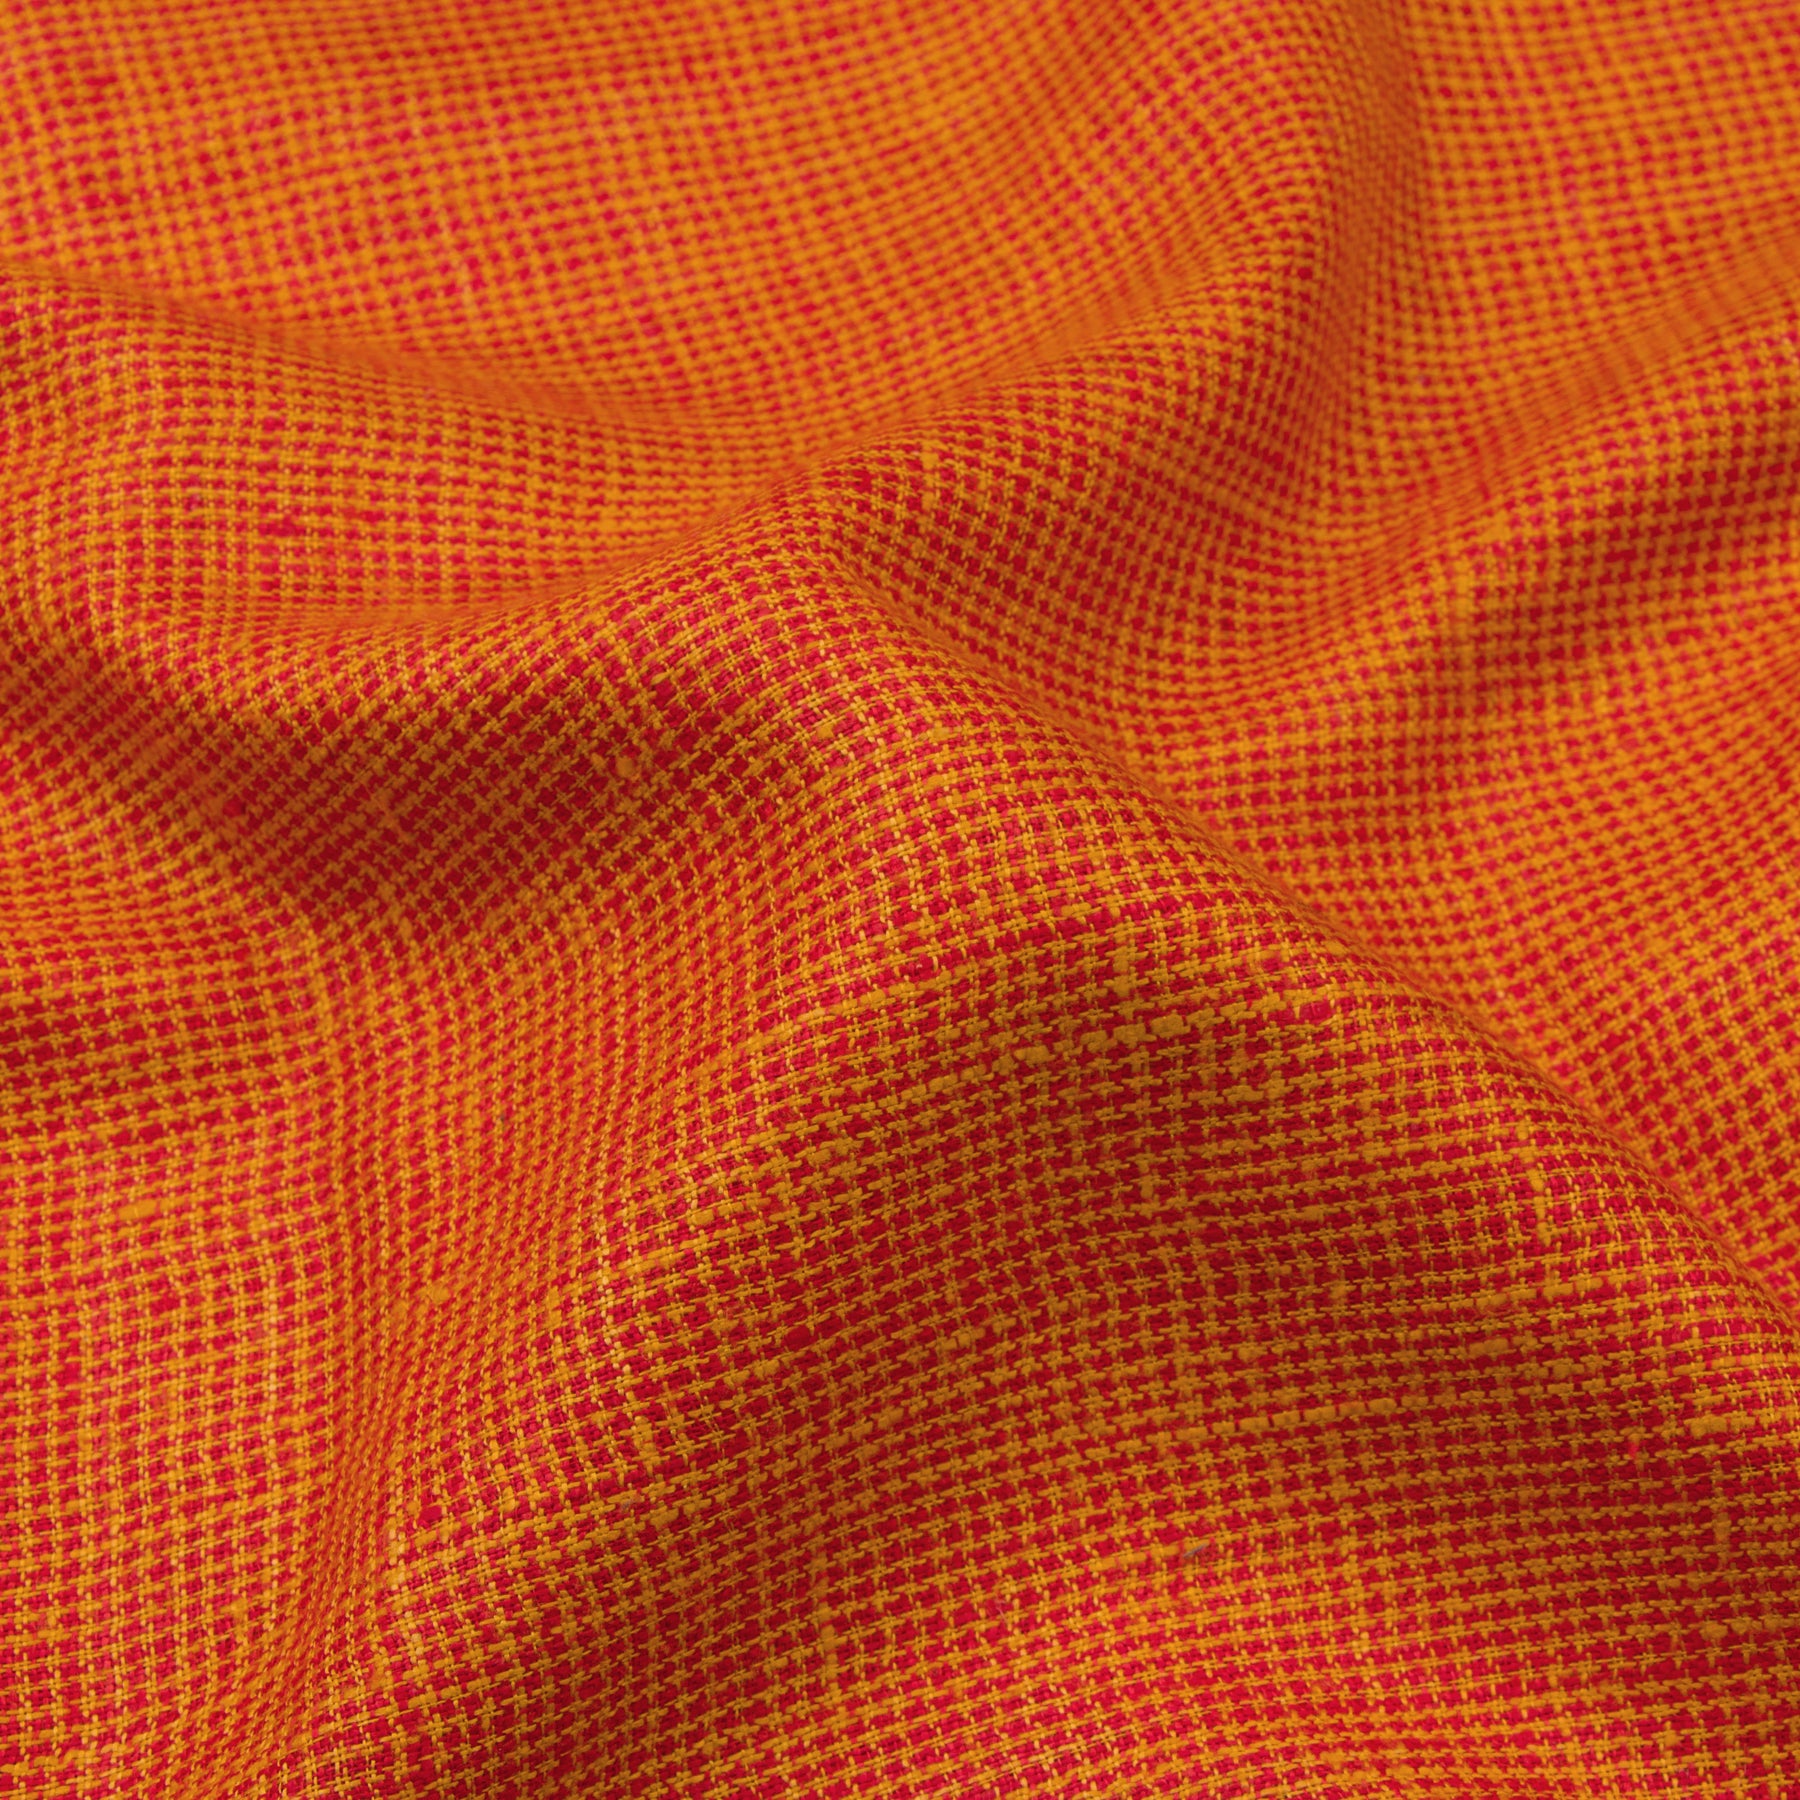 Kanakavalli Mixed Material Blouse Length 22-140-HB002-14440 -Fabric View